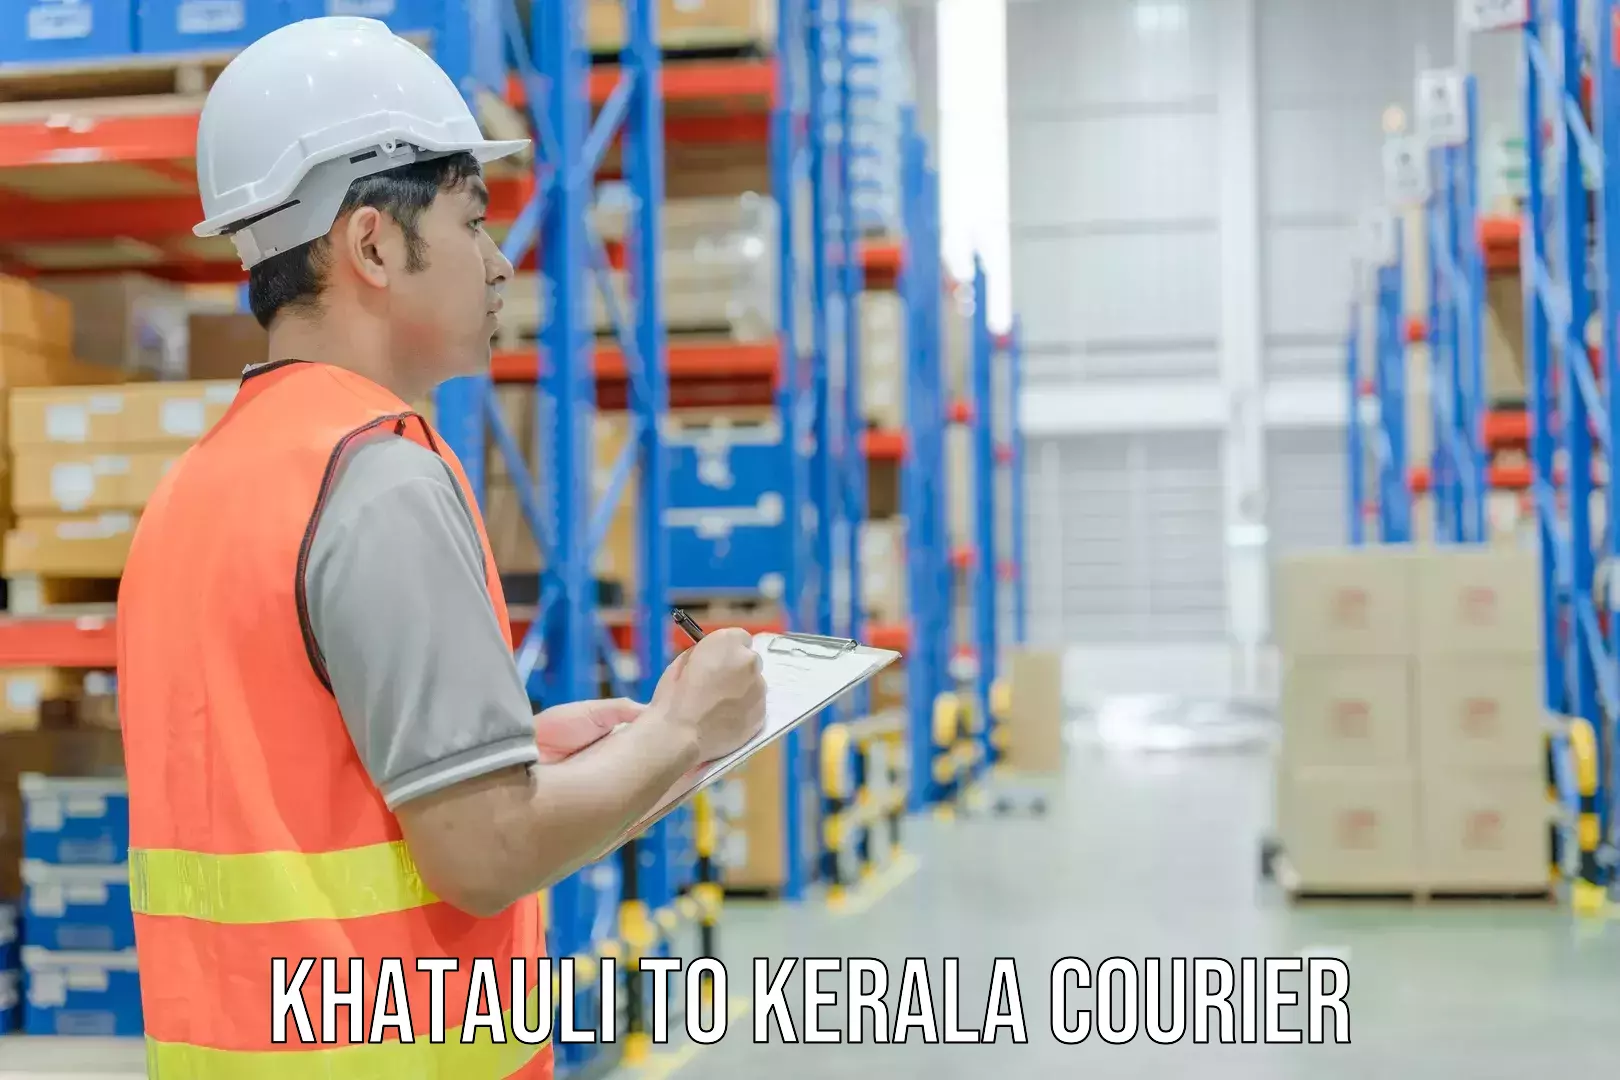 Cash on delivery service Khatauli to Kattappana